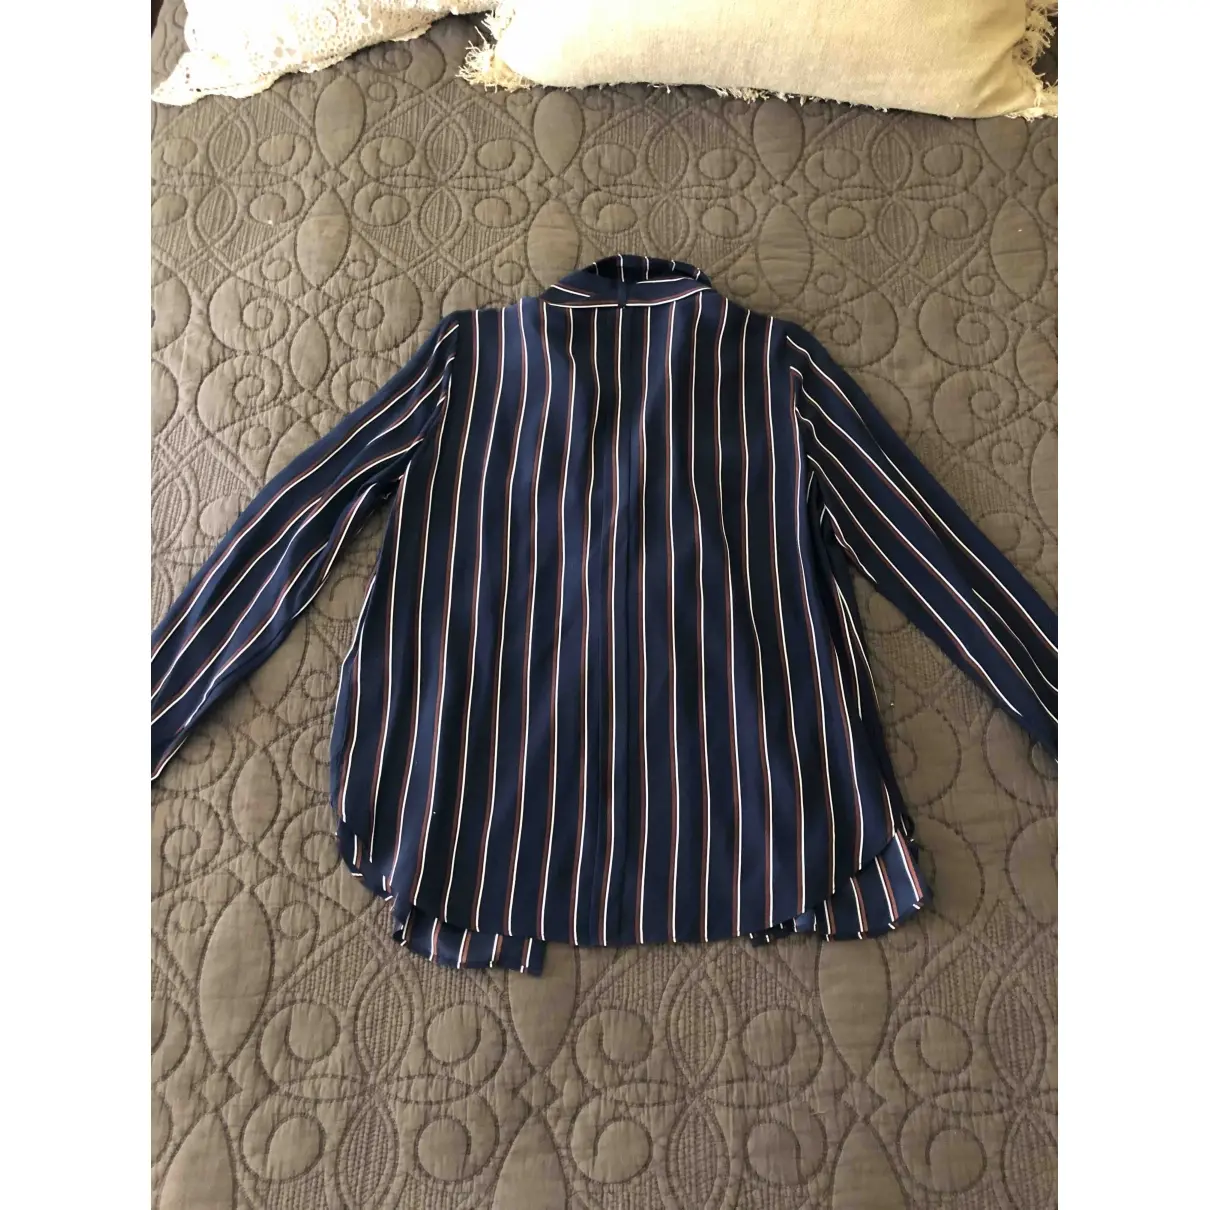 Frame Silk blouse for sale